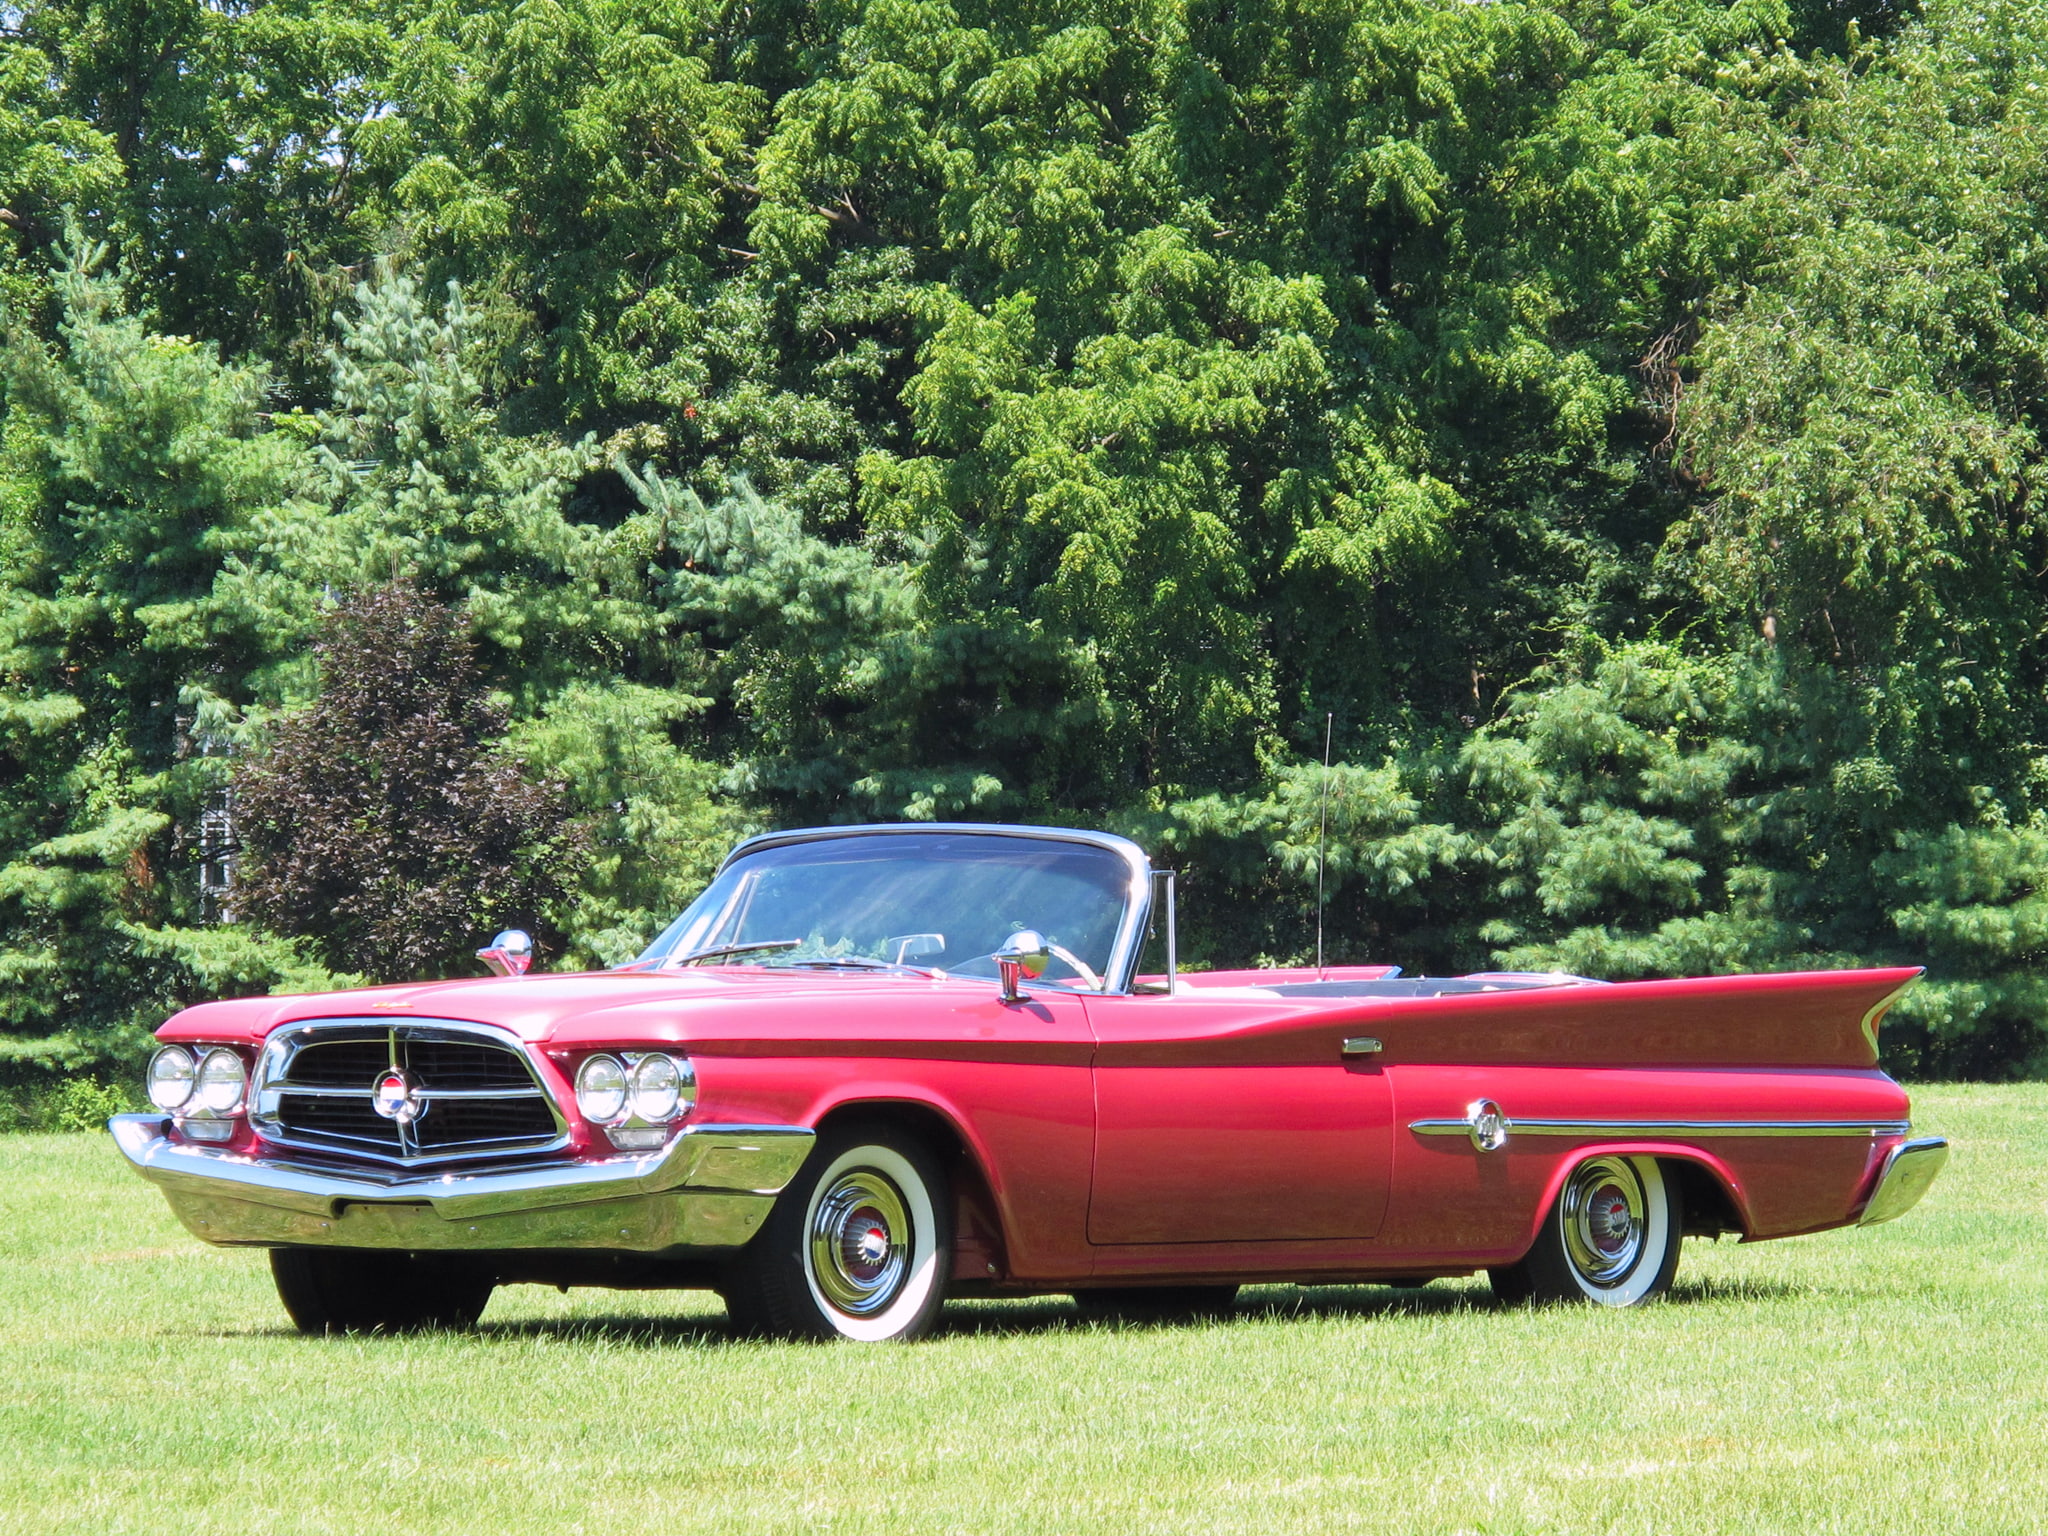 1960, 300f, chrysler, convertible, retro